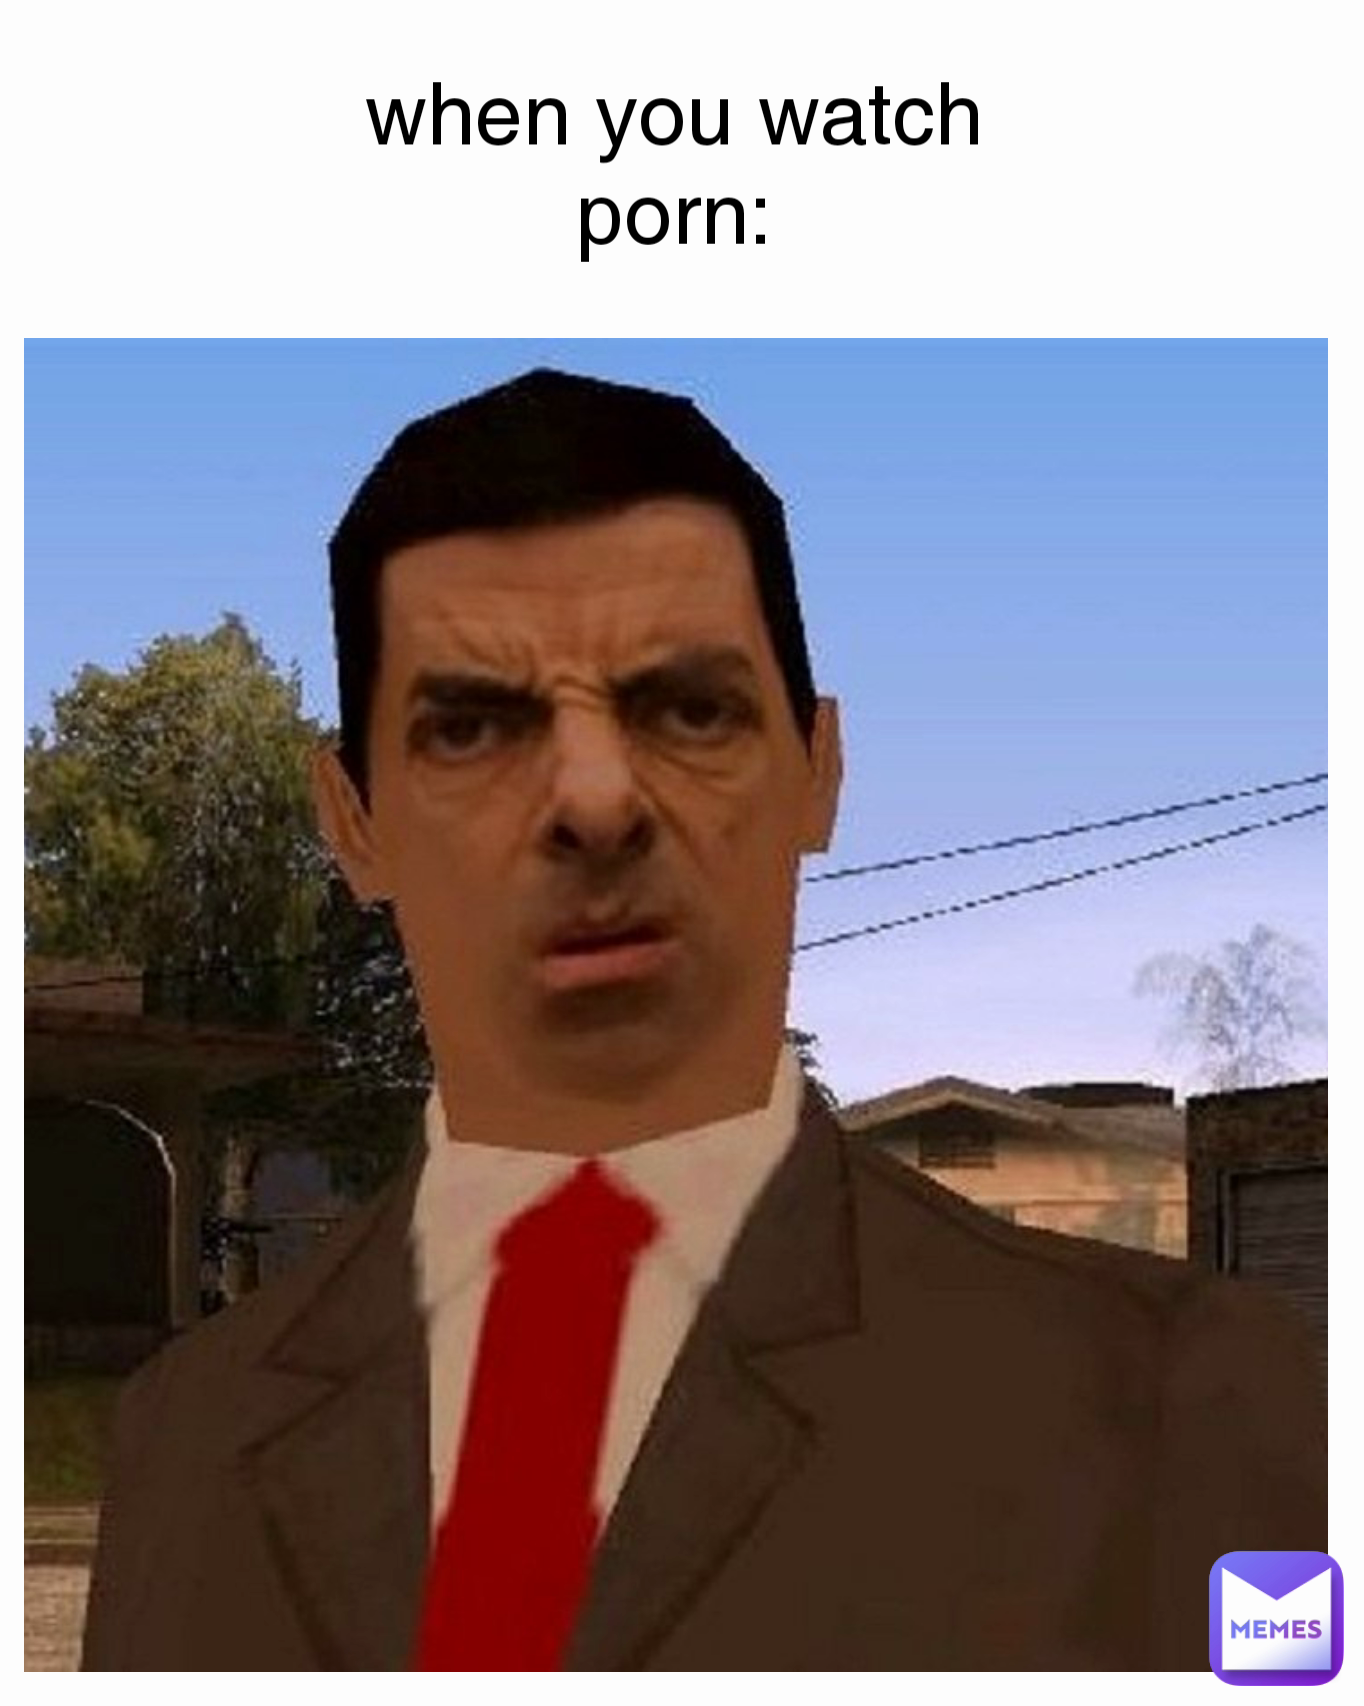 Porn Memes